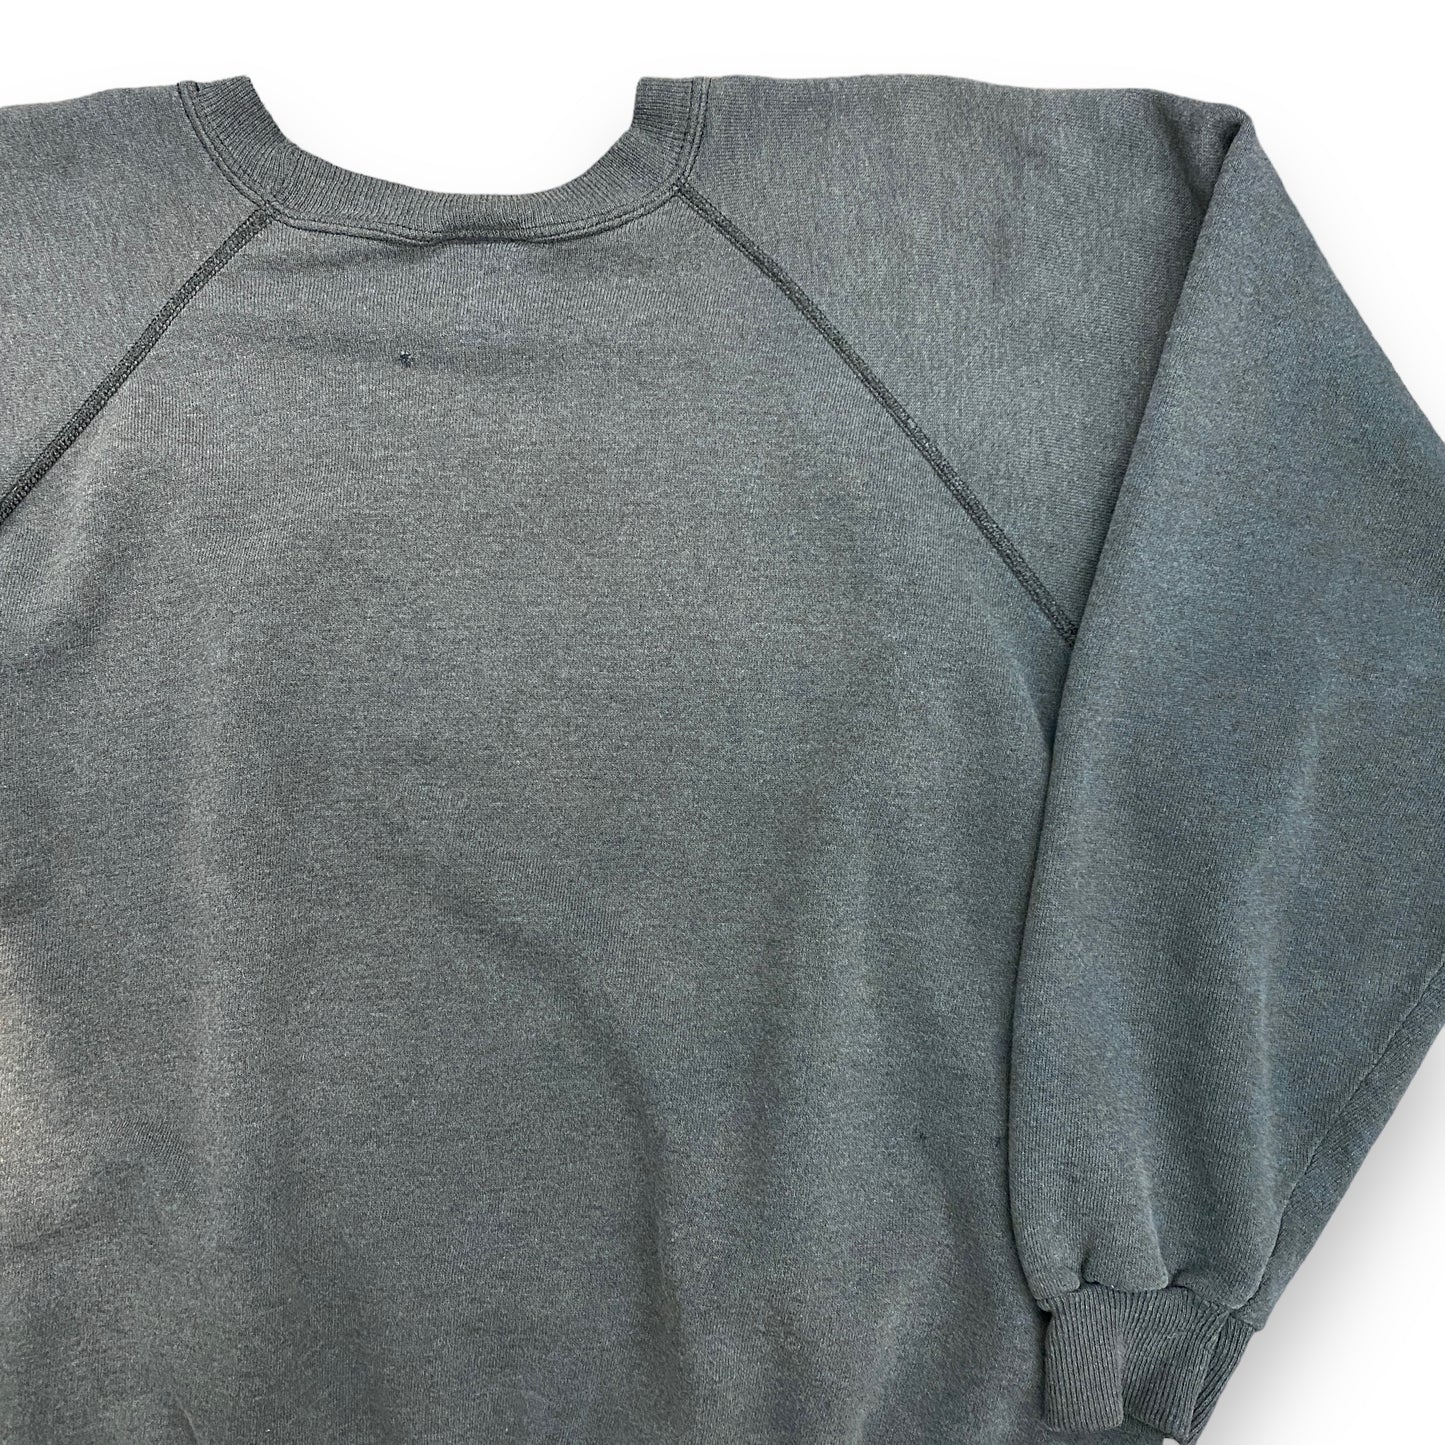 1990s Hanes Faded Black Raglan Sweatshirt - Size XL (Fits Large)